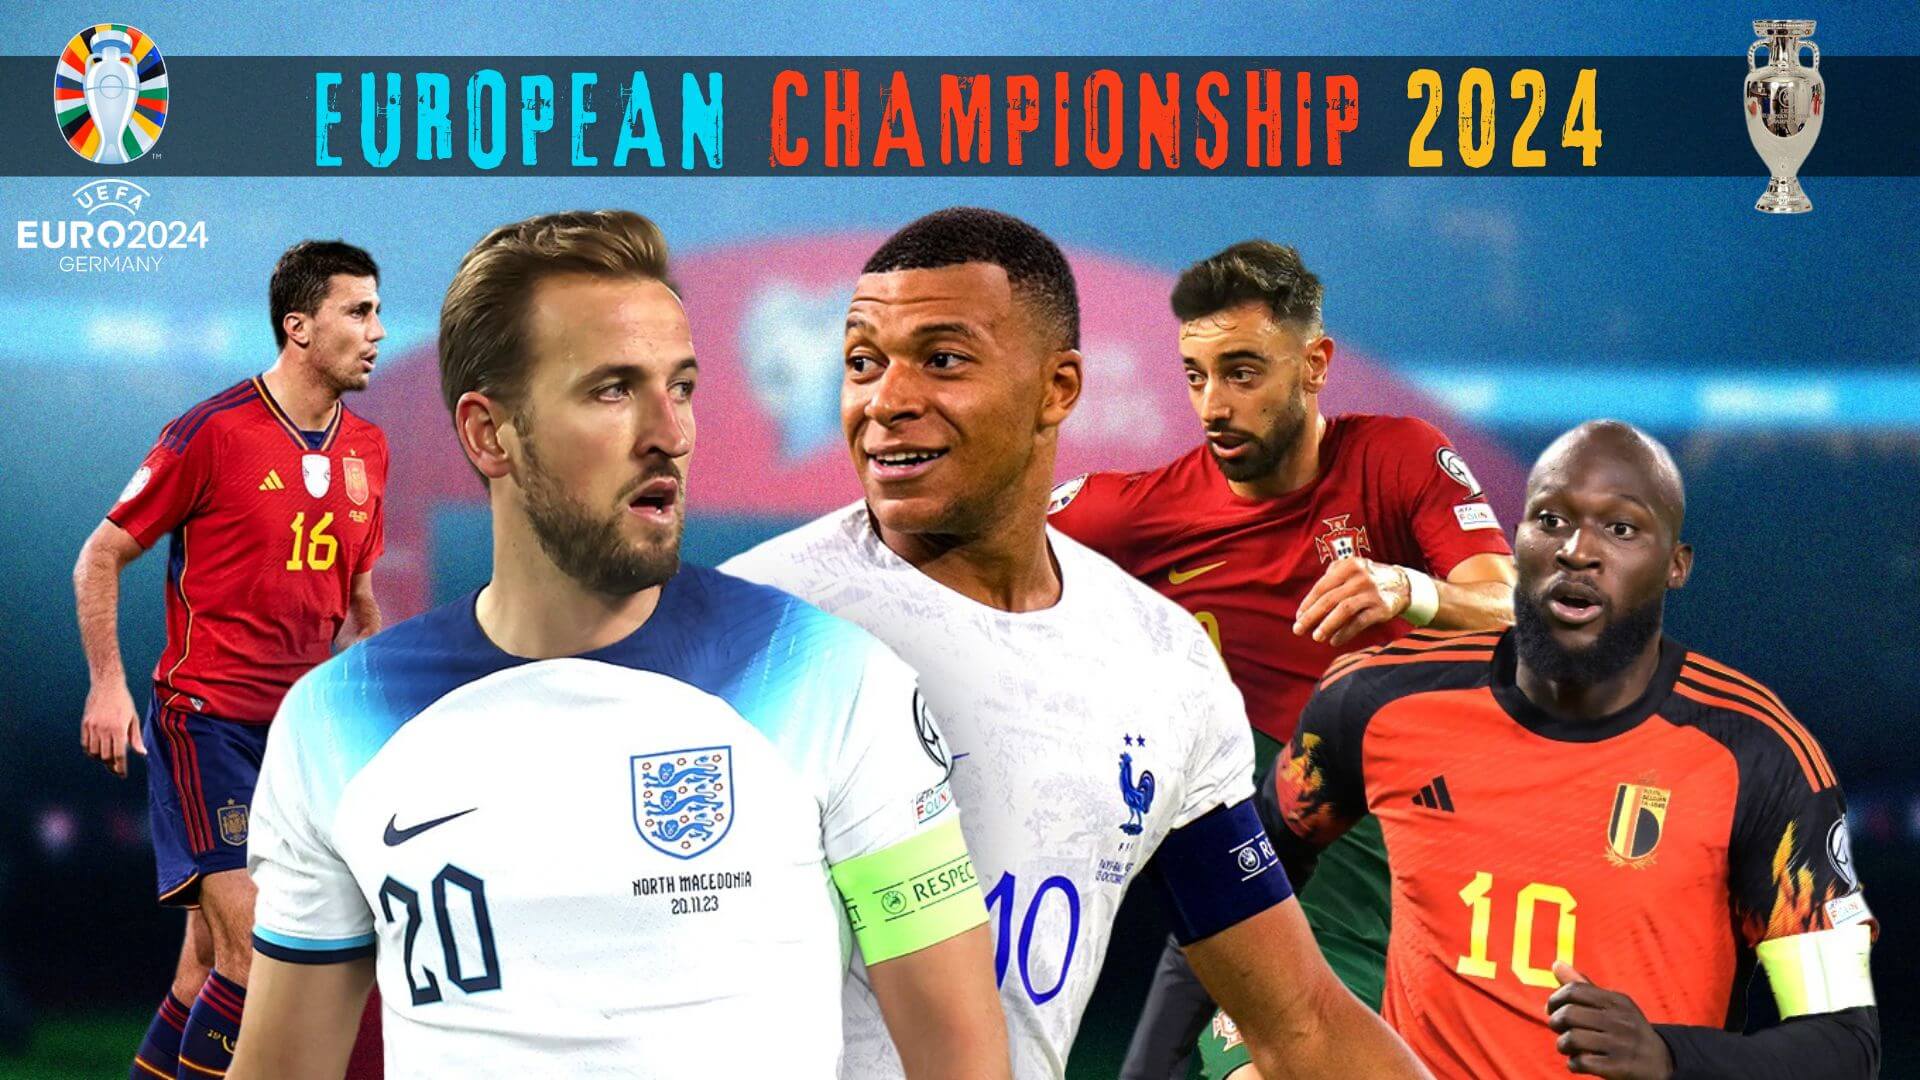 european championship 2024 wallpaper download